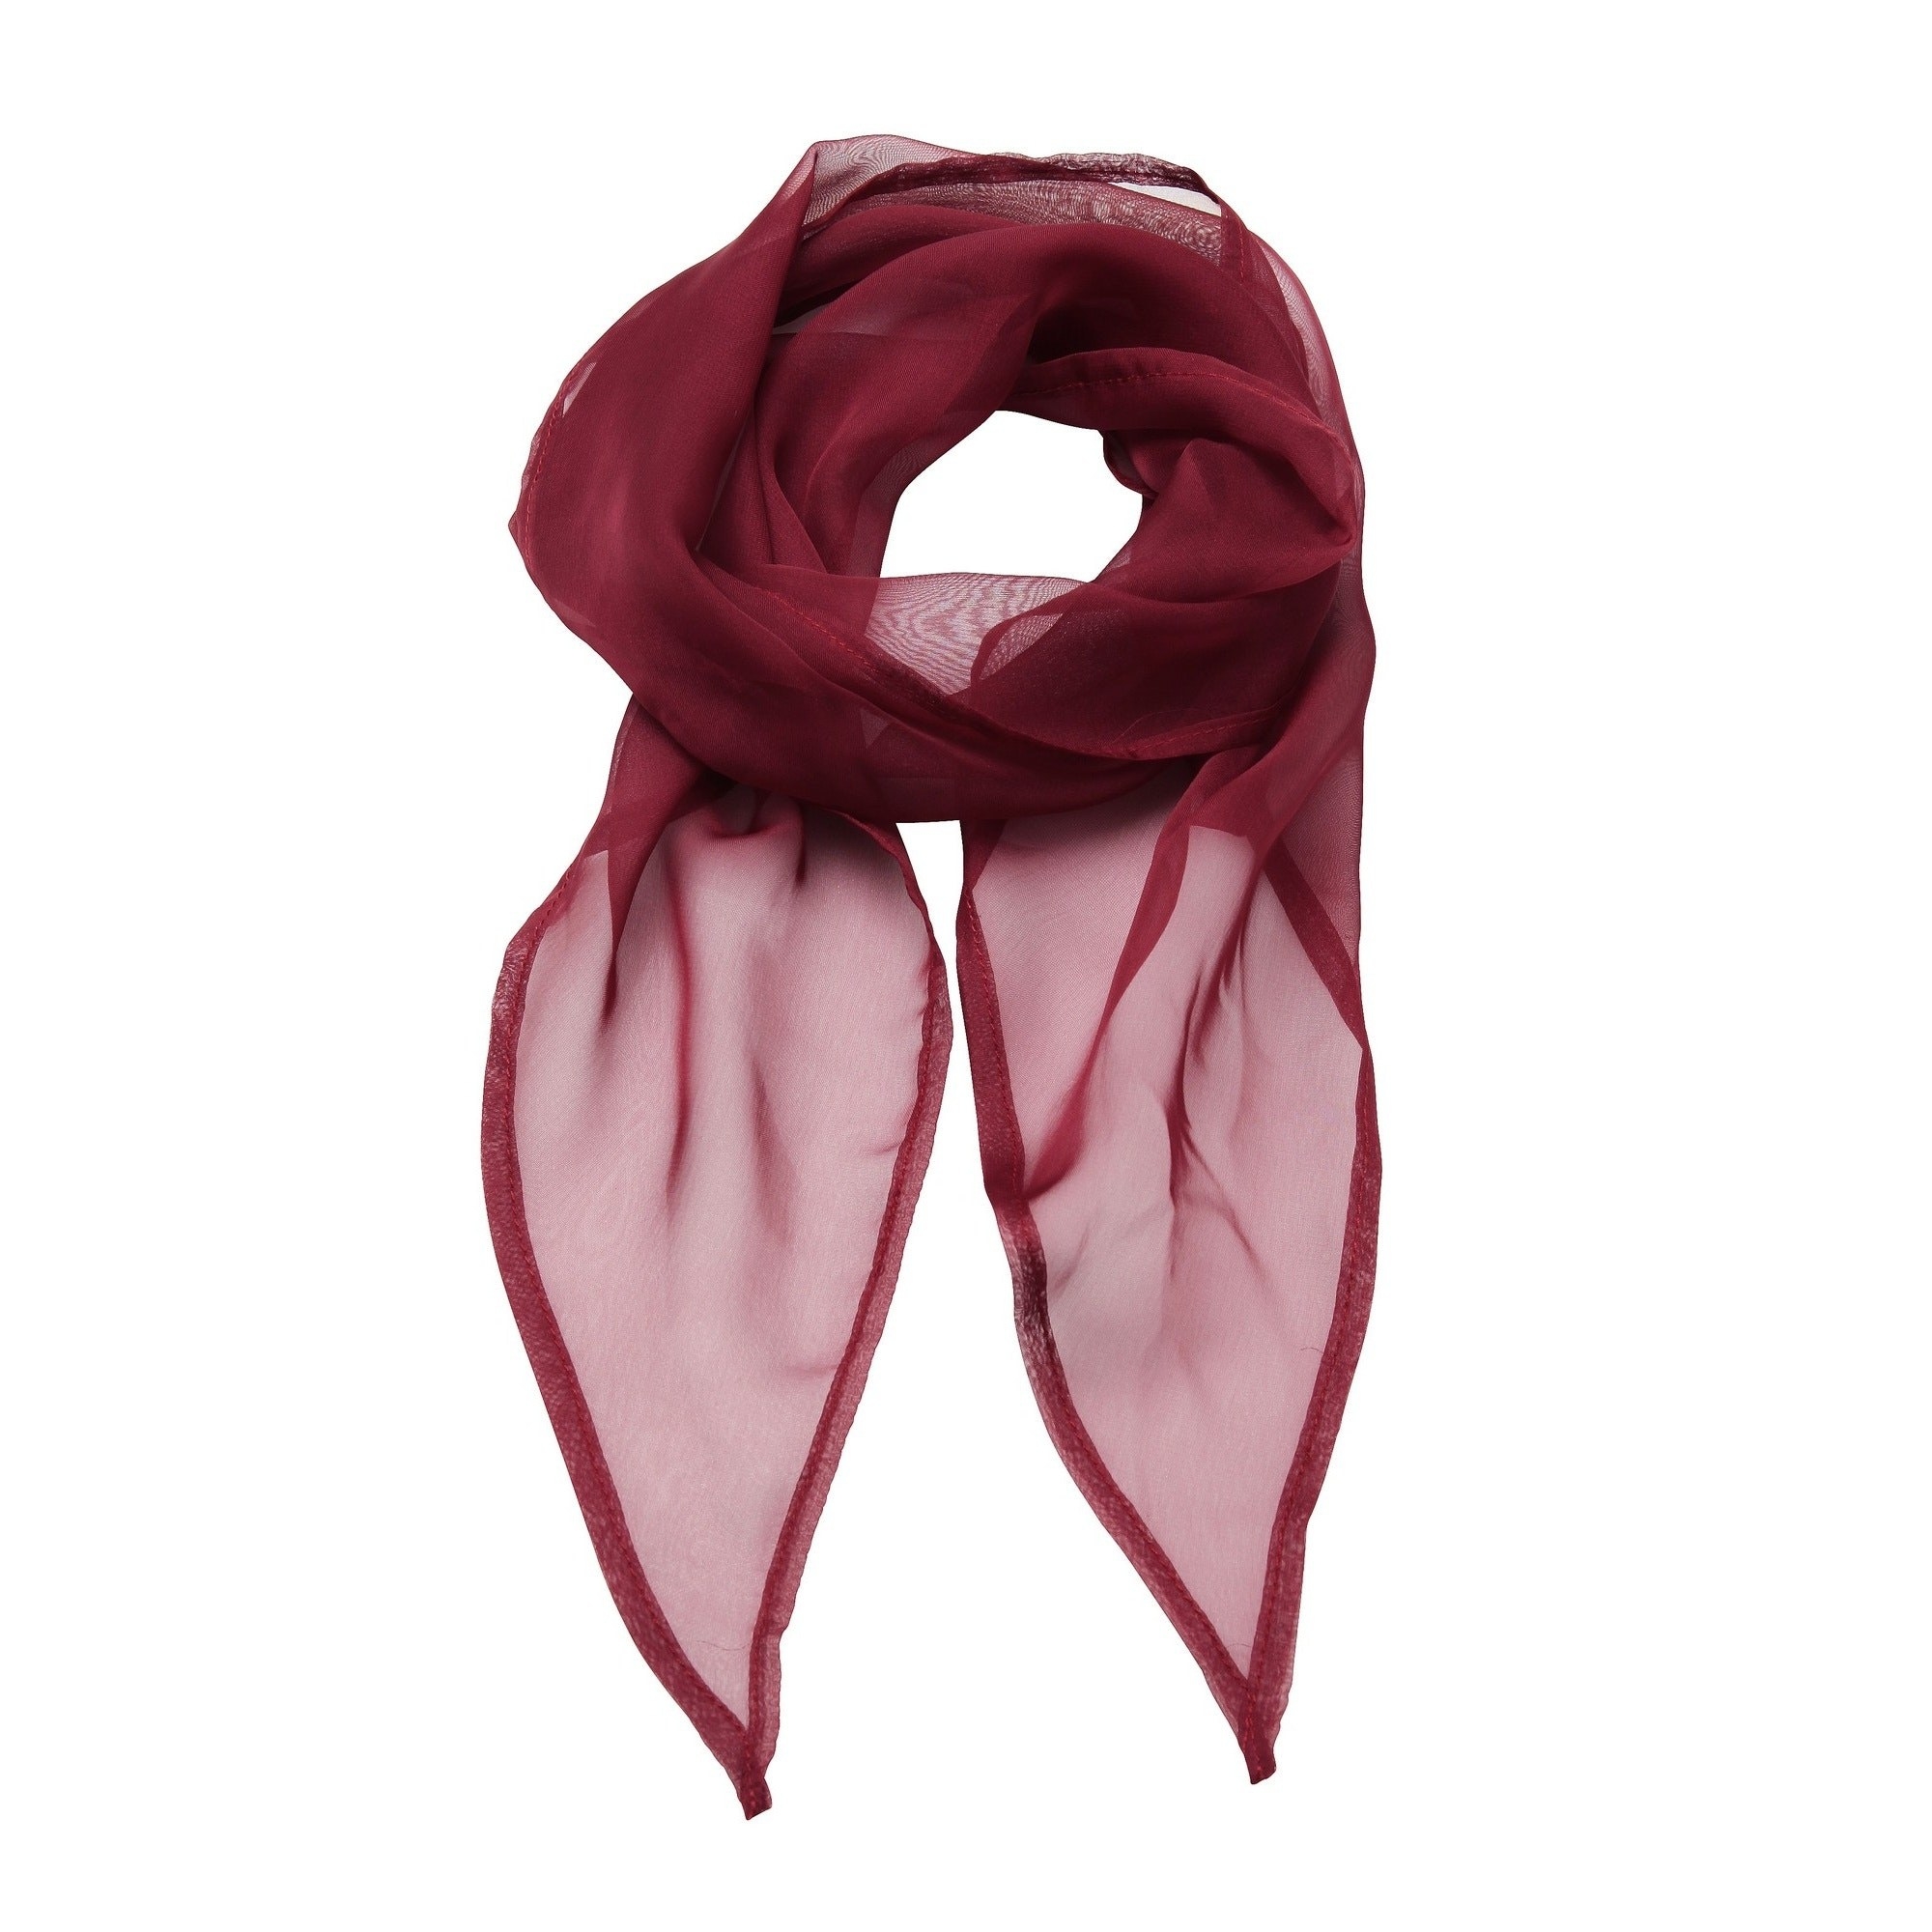 the burgundy scarf